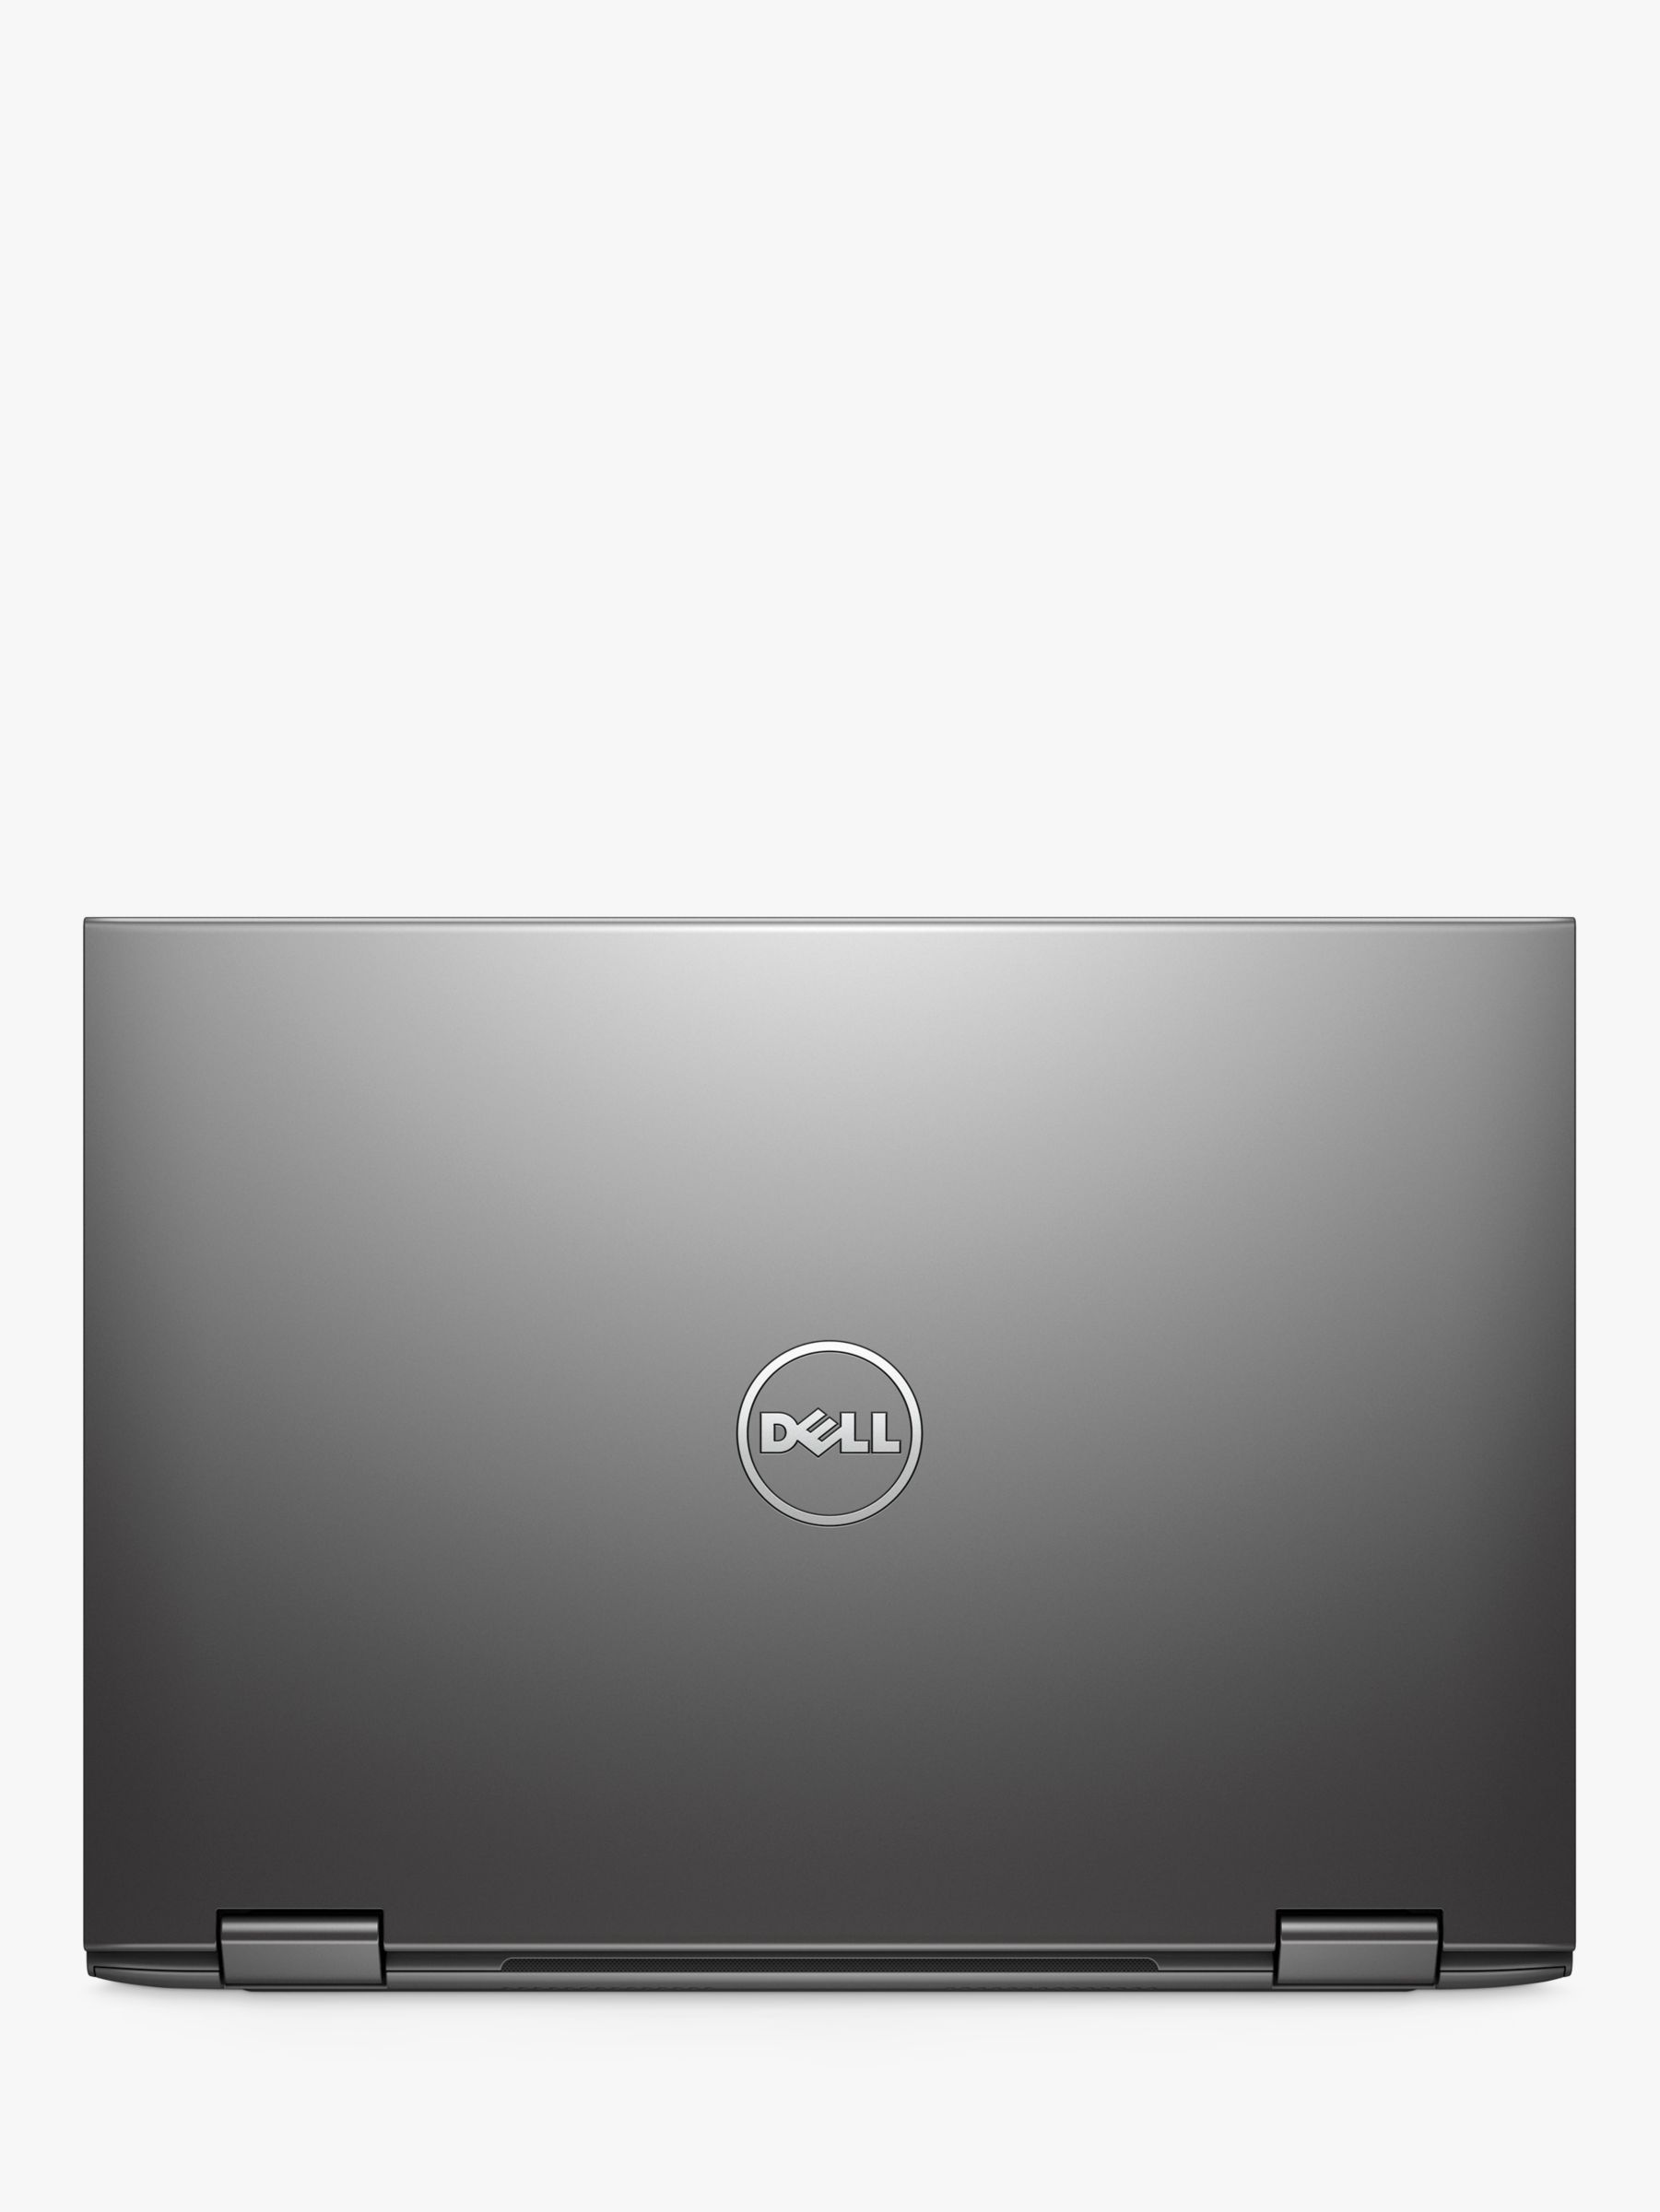 Dell Inspiron 13 5000 Series Convertible Laptop, Intel Core i3, 4GB RAM